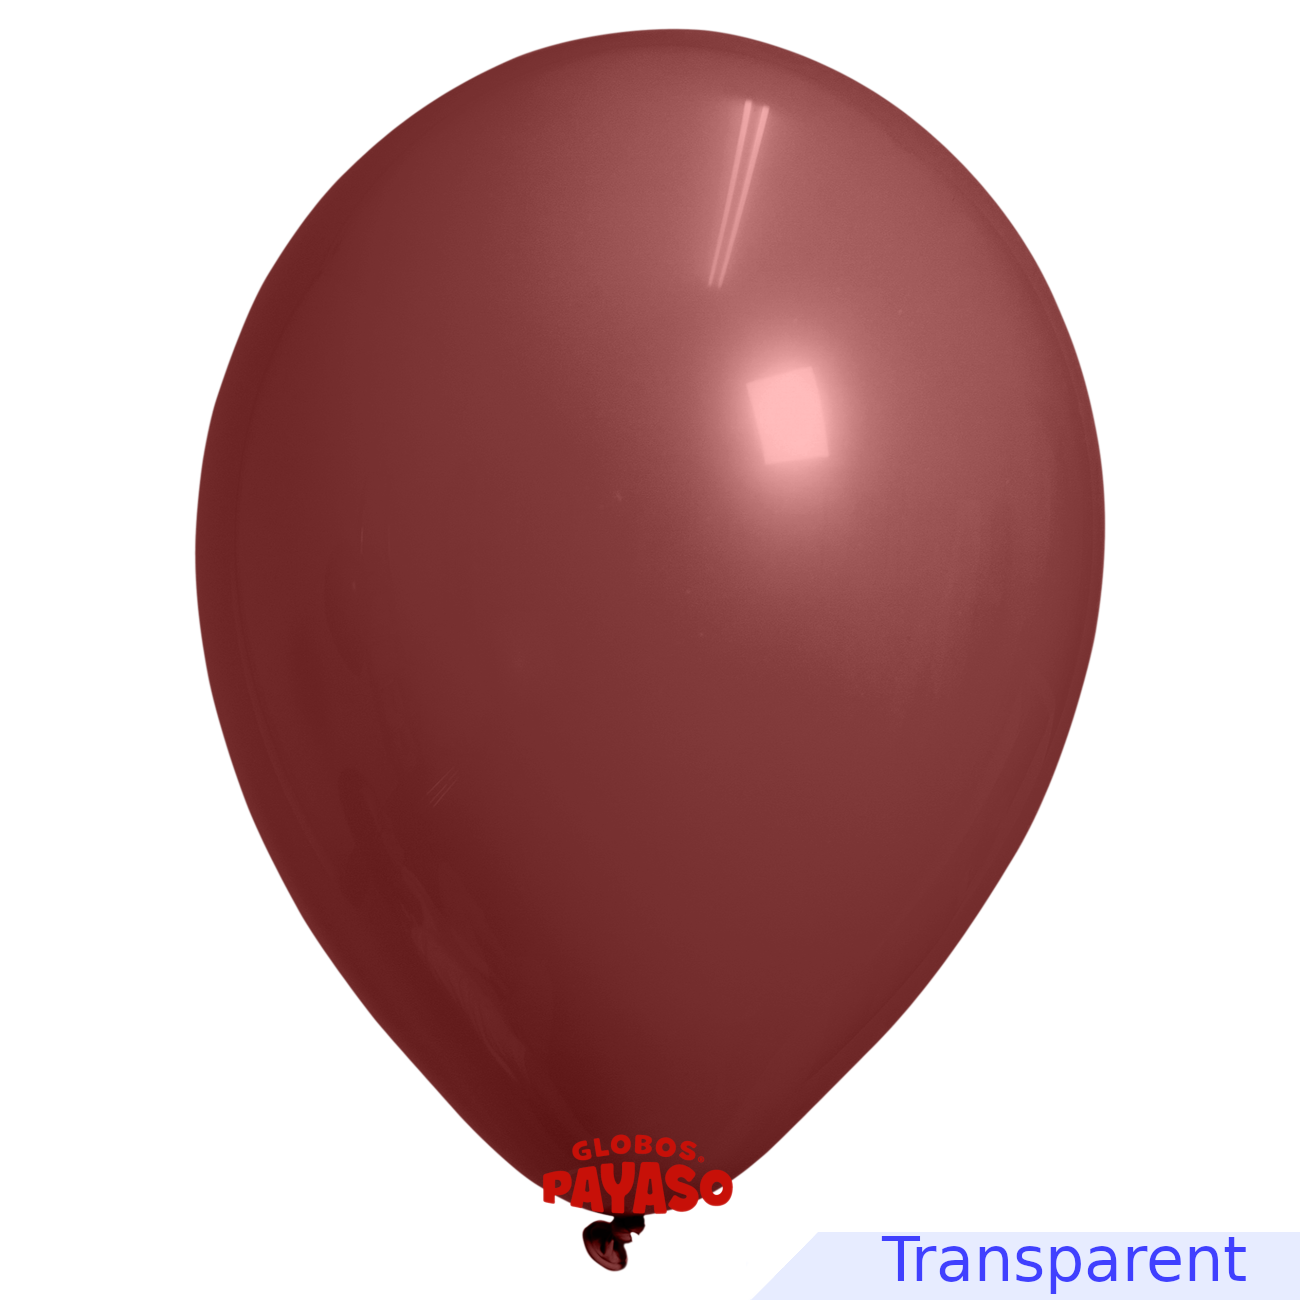 Globos Payaso / Unique 24" Burgundy Translucid Decorator Balloon